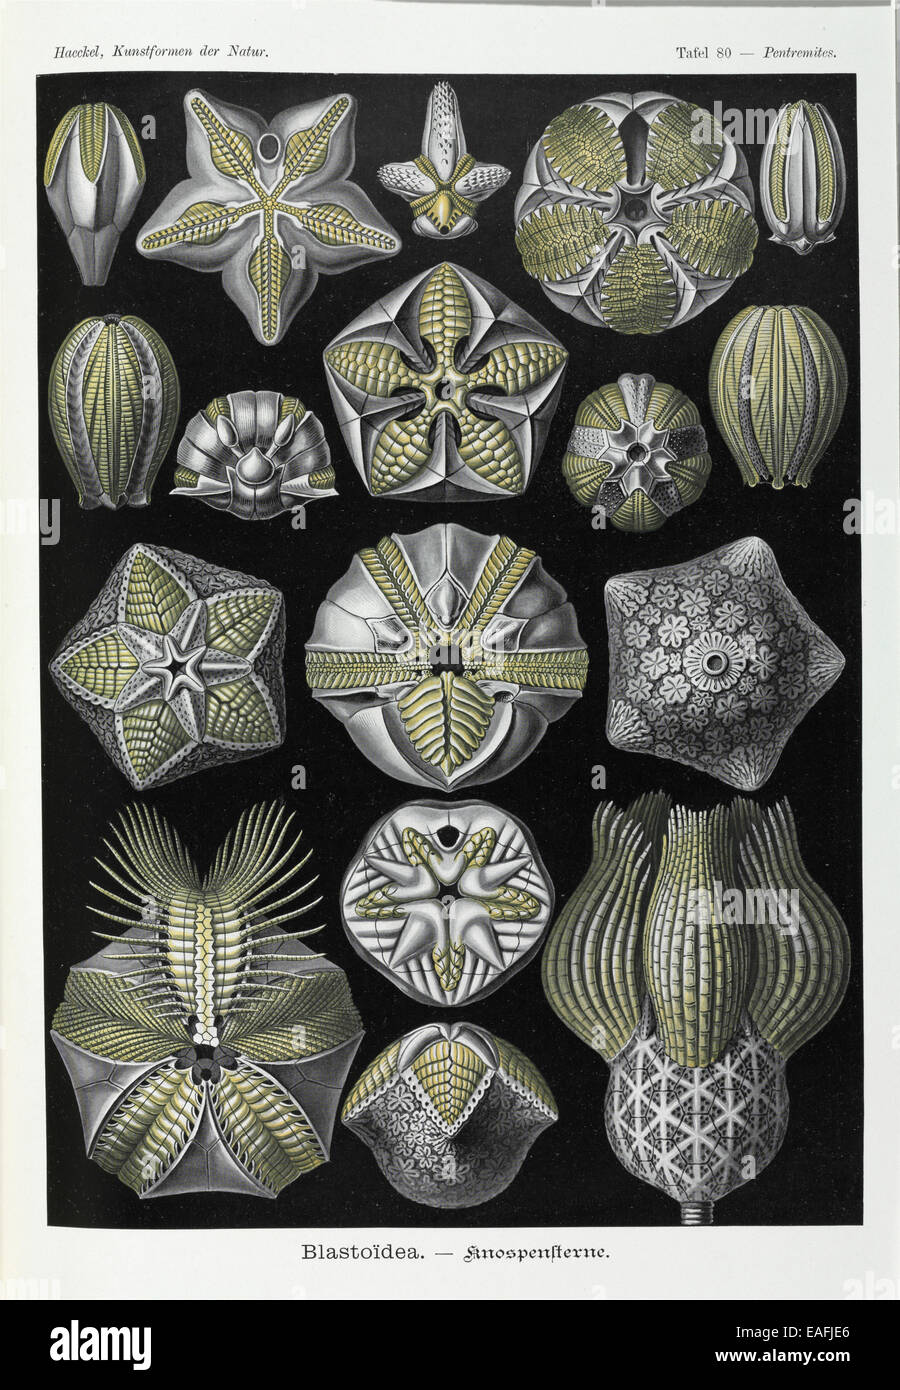 Blastoidea; various species of a type of extinct stemmed echinoderm. Stock Photo